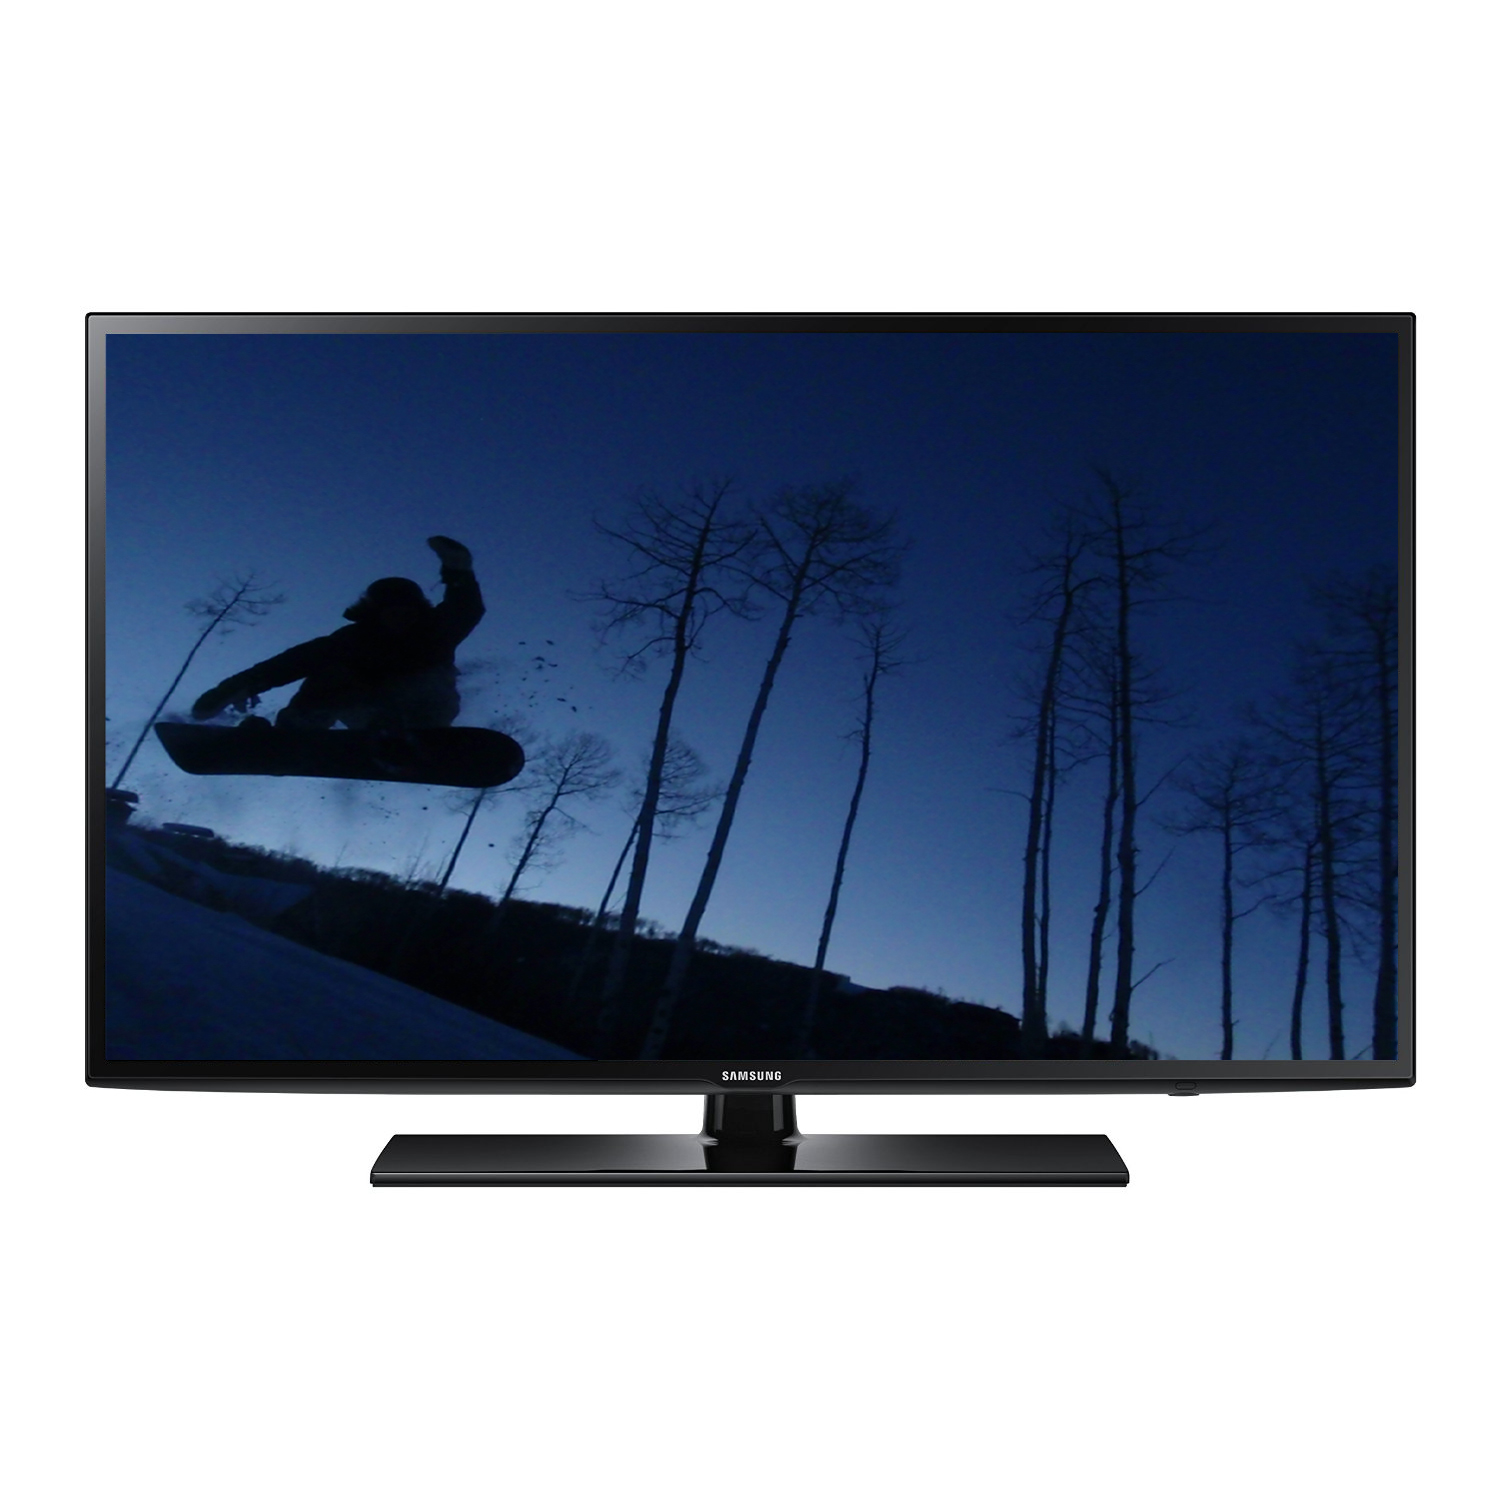 Samsung Refurbished 60" Class 1080p LED Smart HDTV - UN60J6200